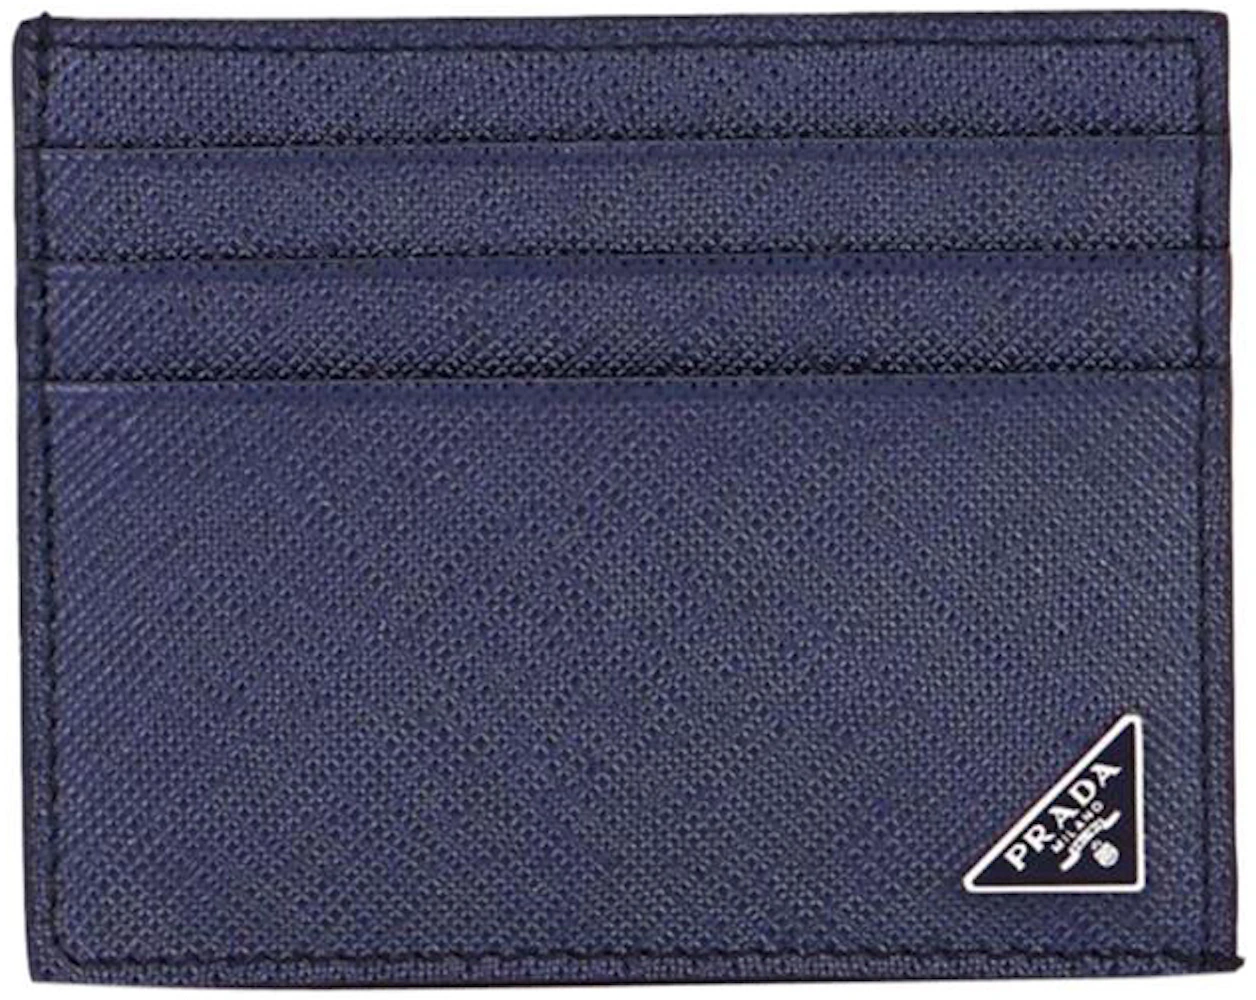 Prada Saffiano Leather Badge Holder - Blue